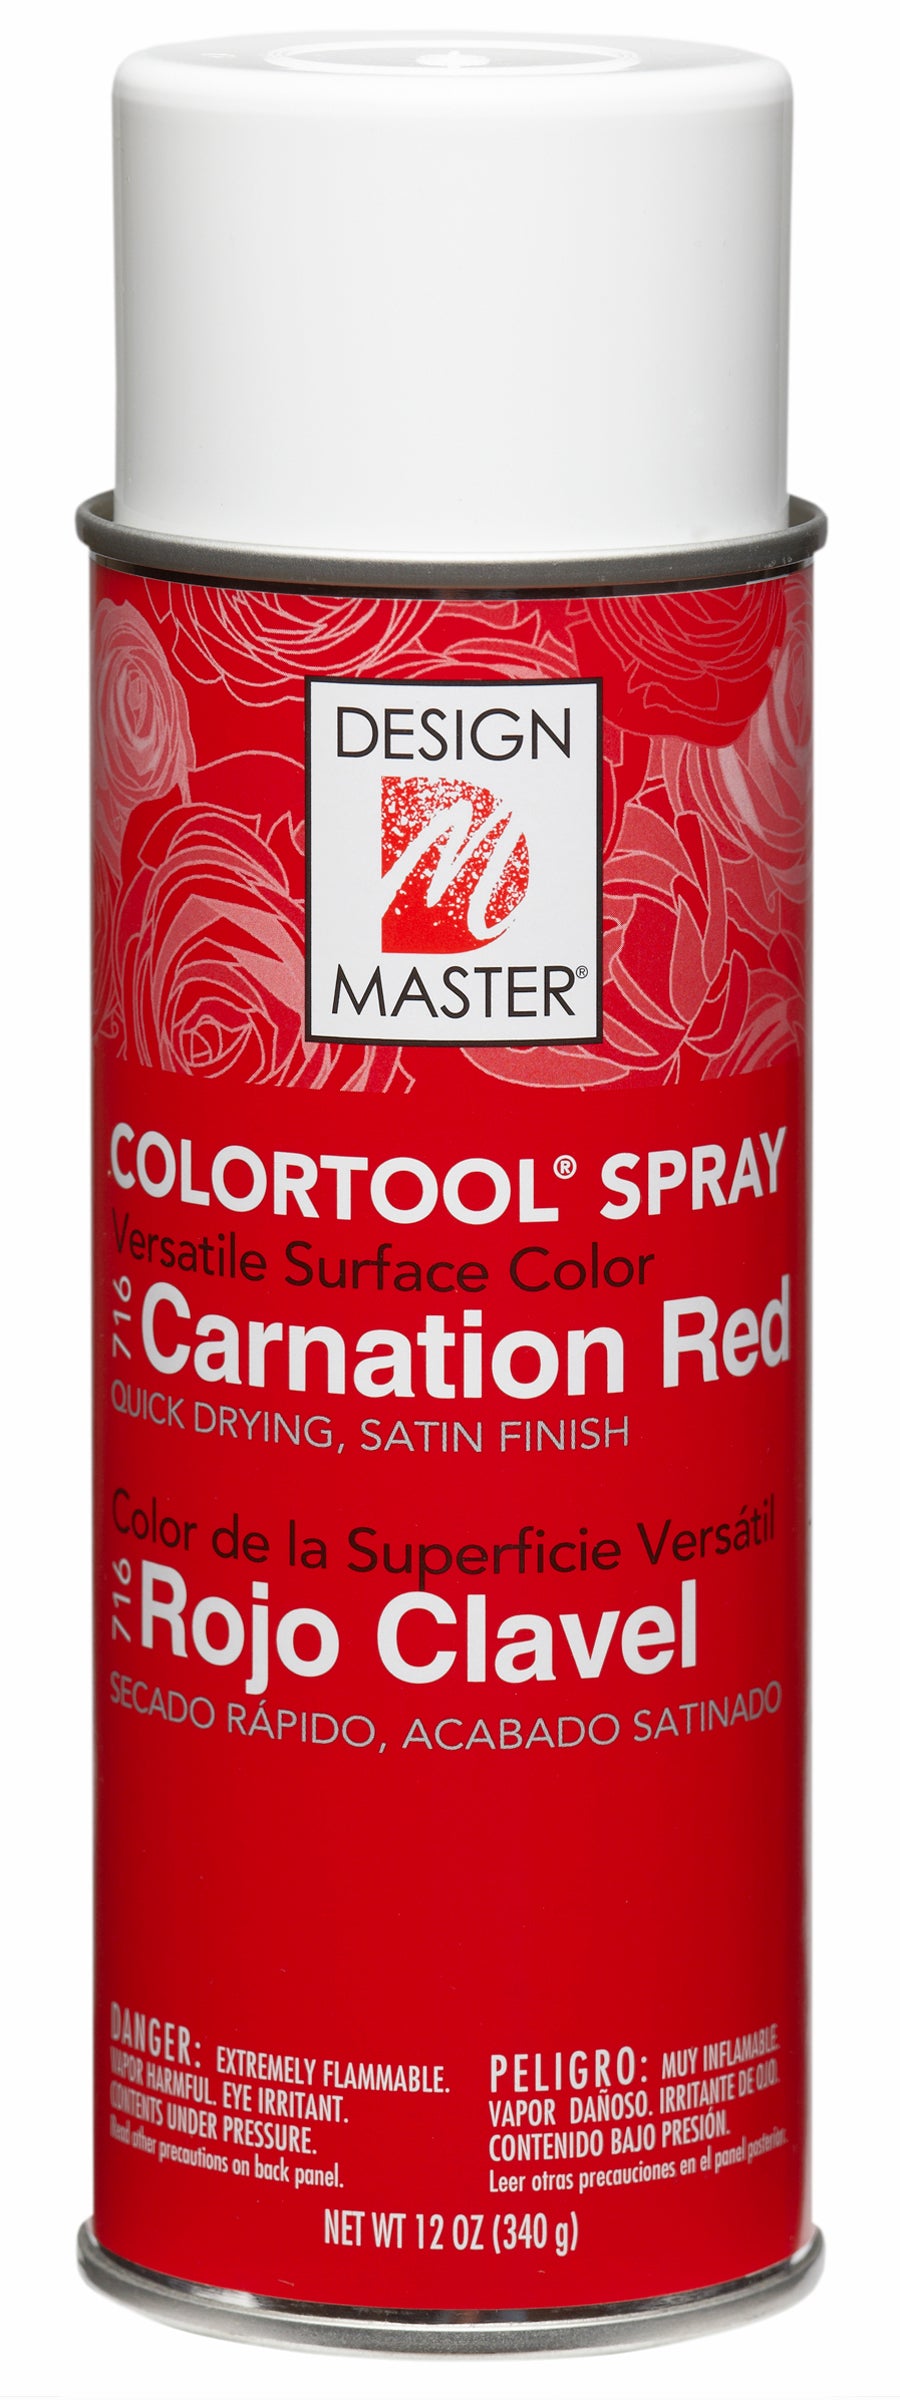 Design Master Colortool Spray-Carnation Red